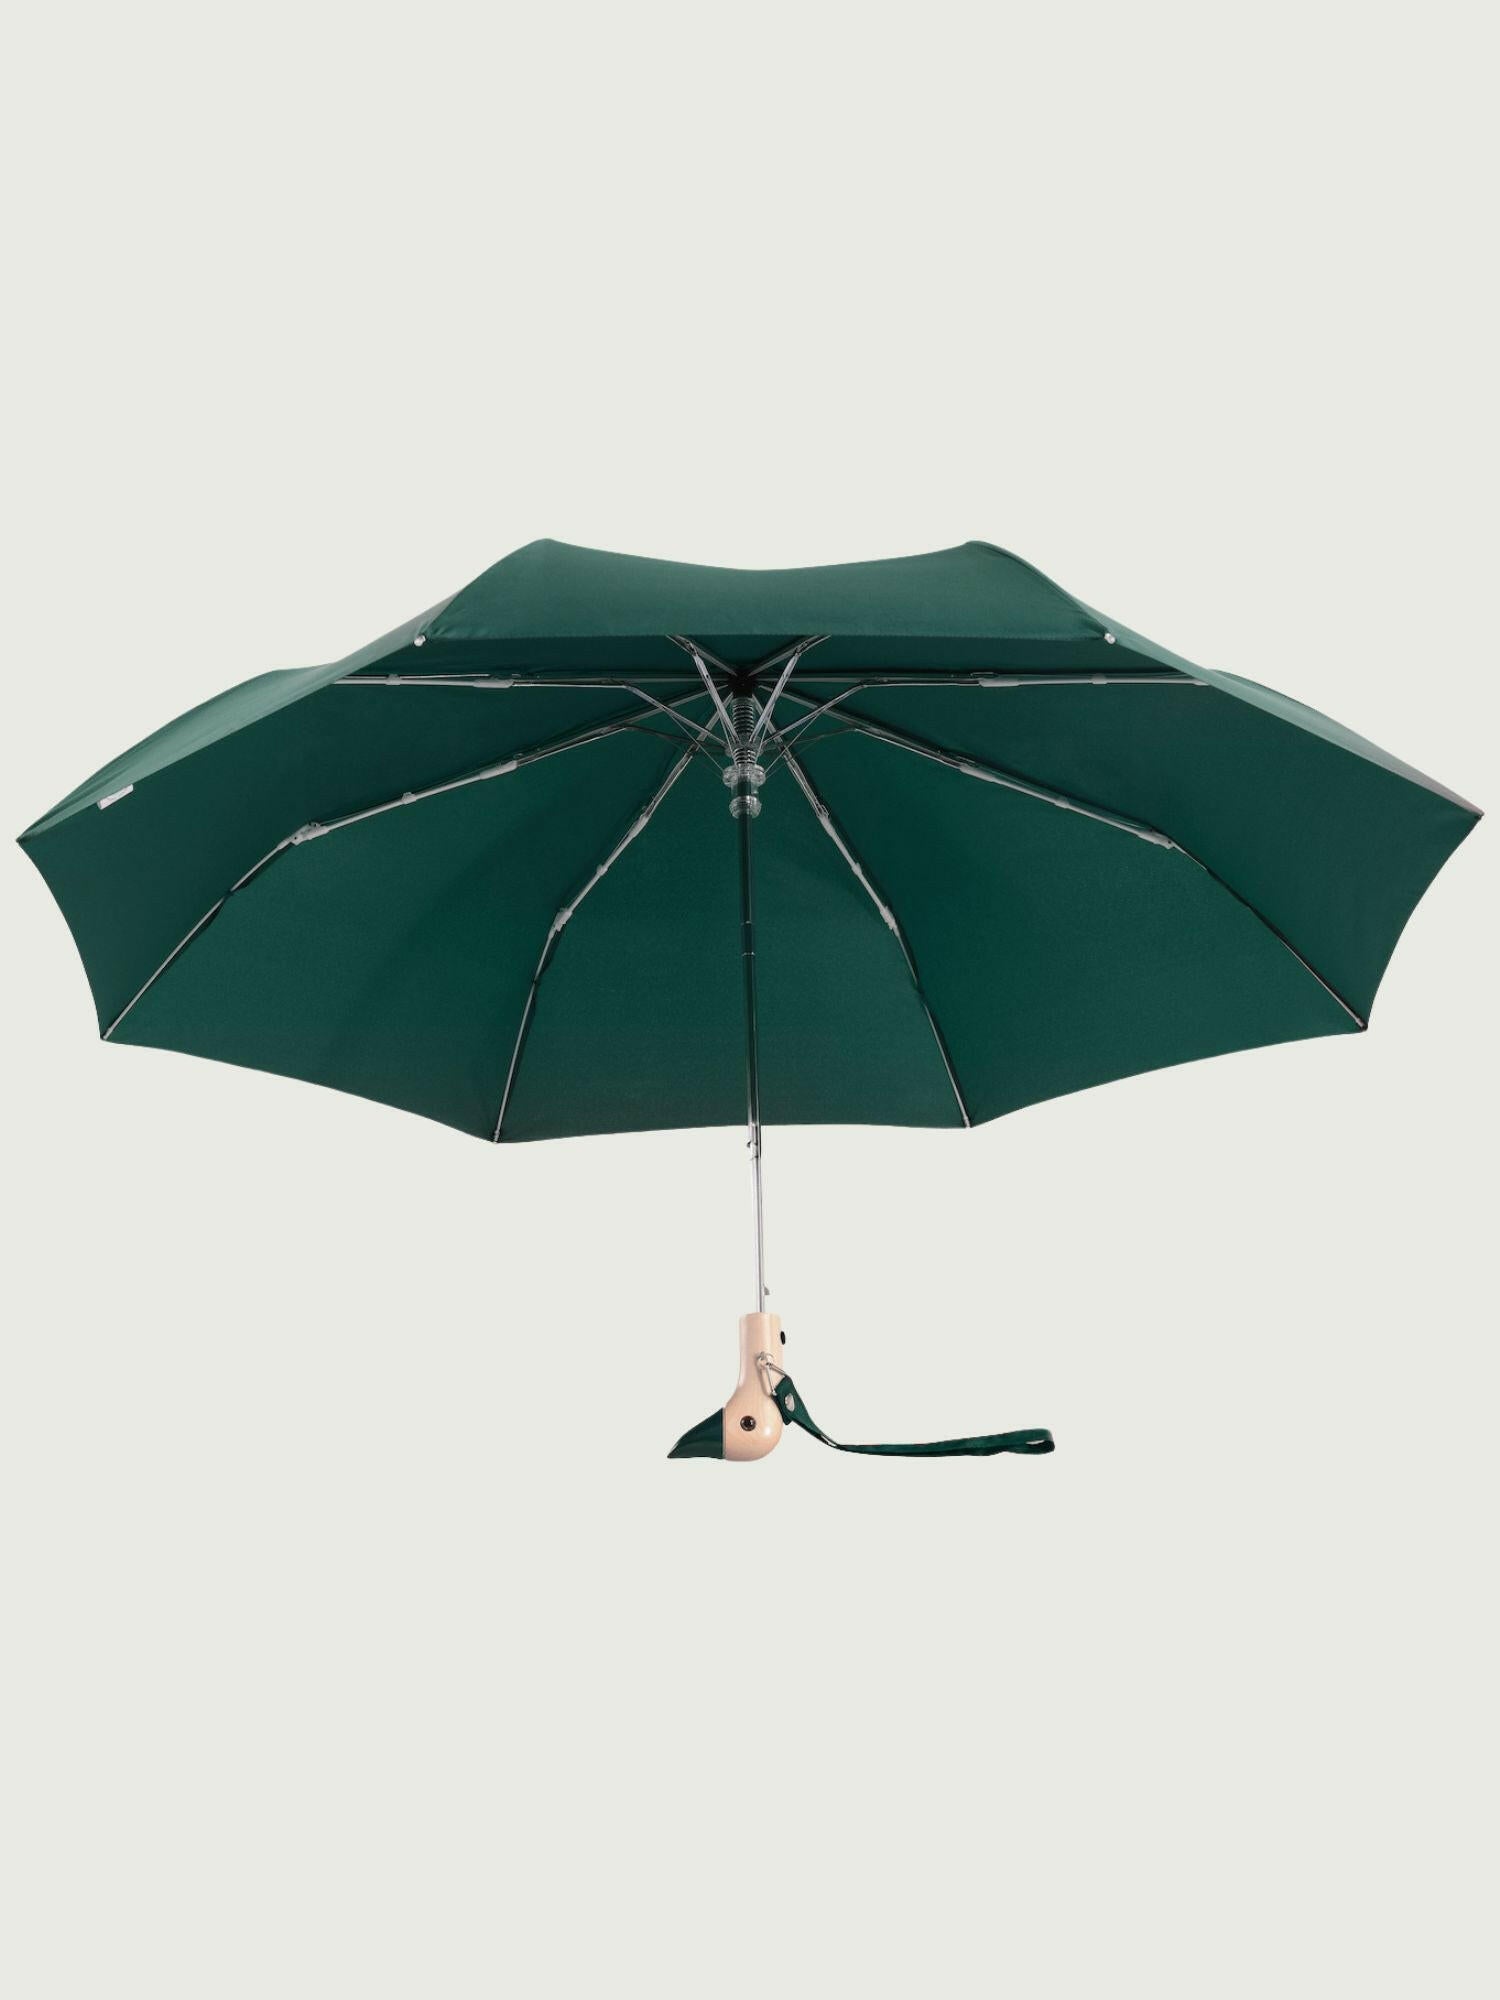 Forest Green Eco-Friendly Umbrella.